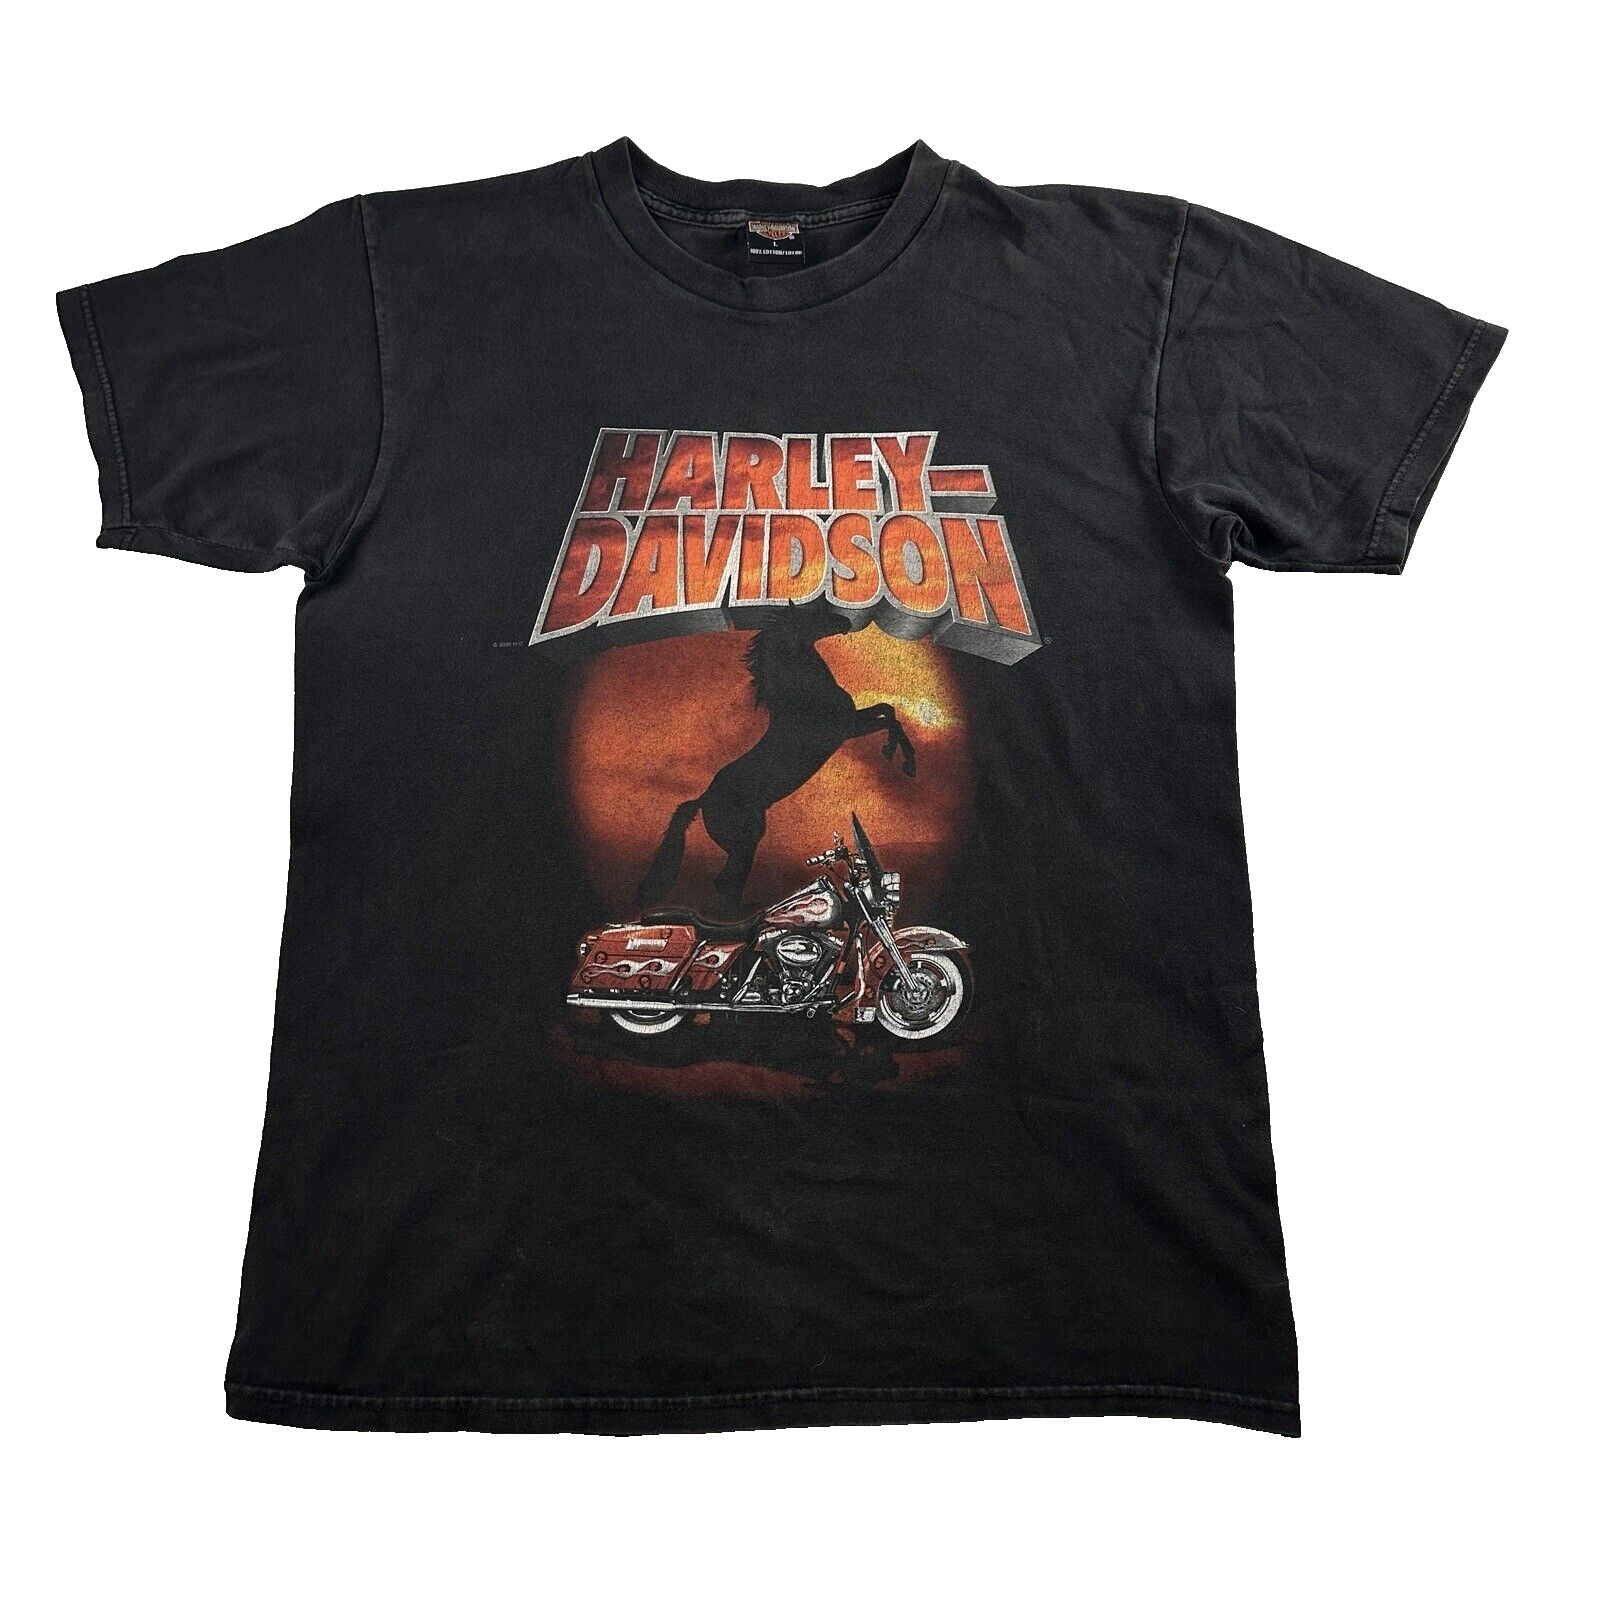 Harley Davidson Motorcycle T Shirt Men's sz L Black Santa Barbara California